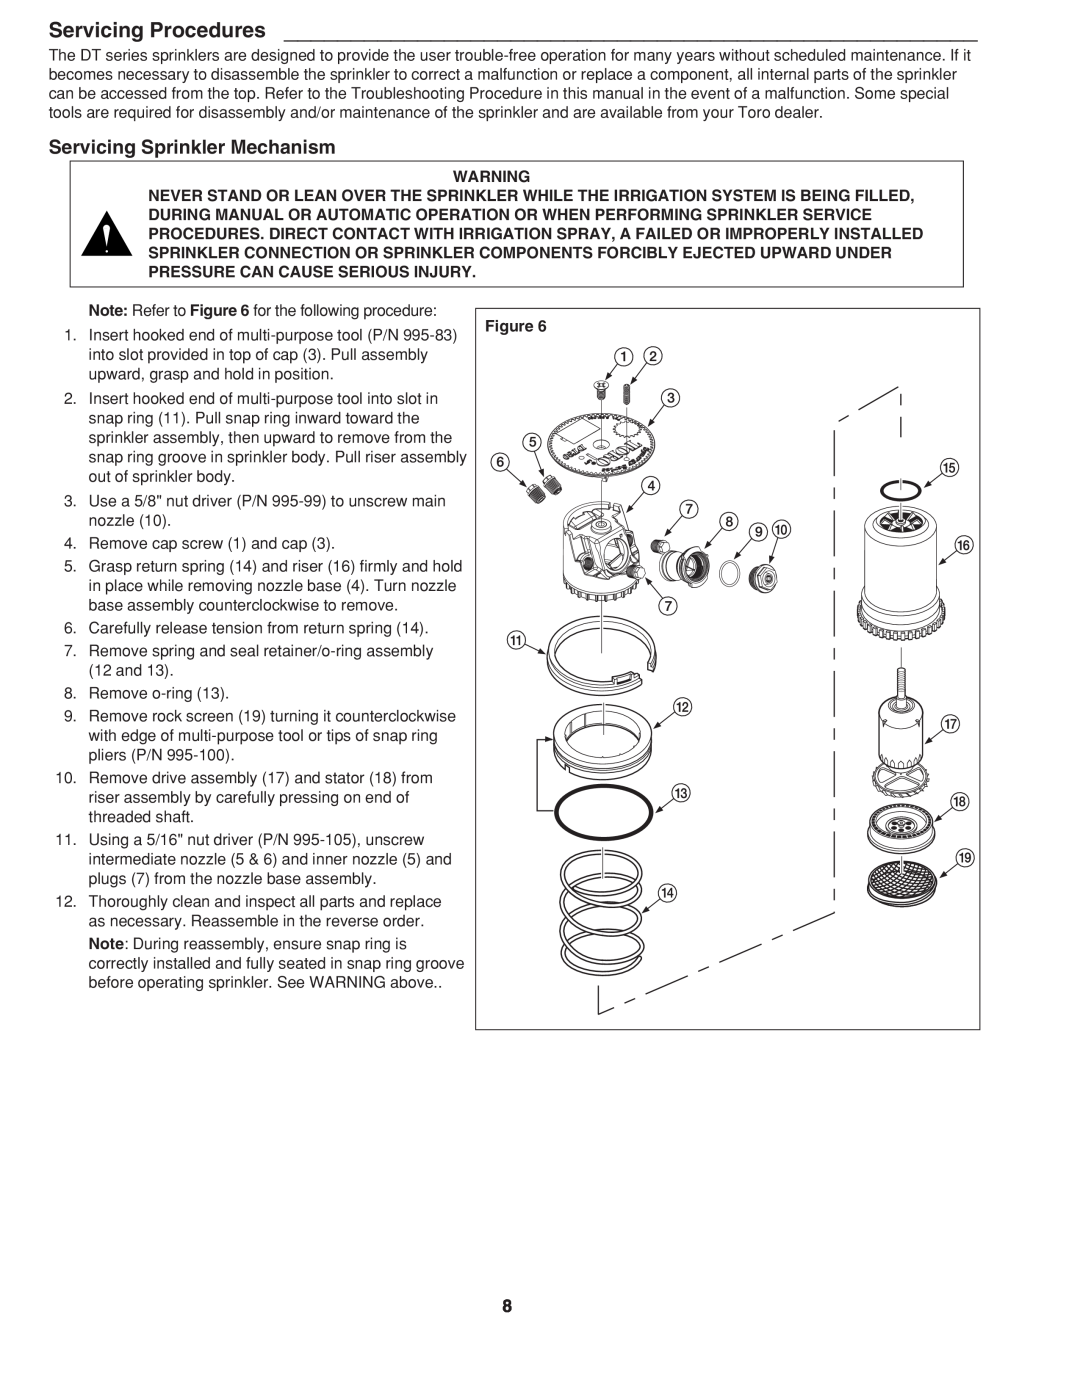 Toro DT54, DT34 specifications Servicing Procedures, Servicing Sprinkler Mechanism 